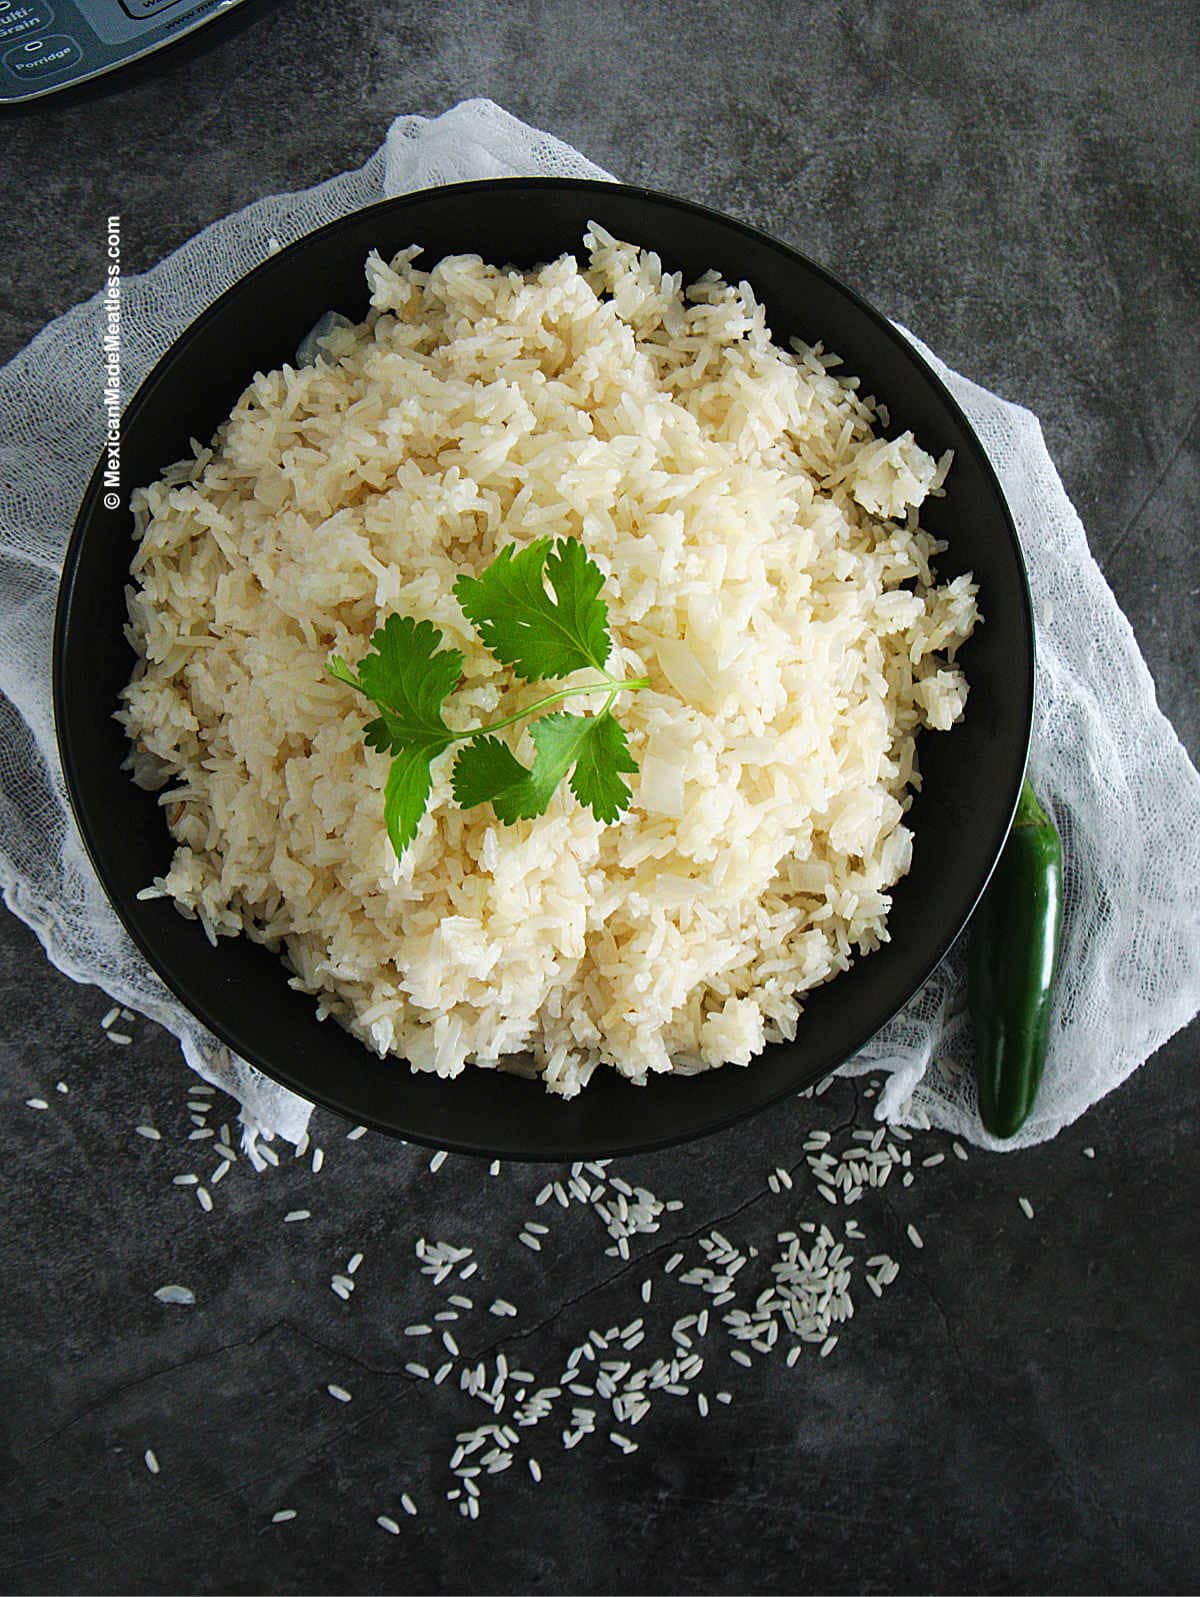 Arroz Blanco Recipe or Mexican White Rice